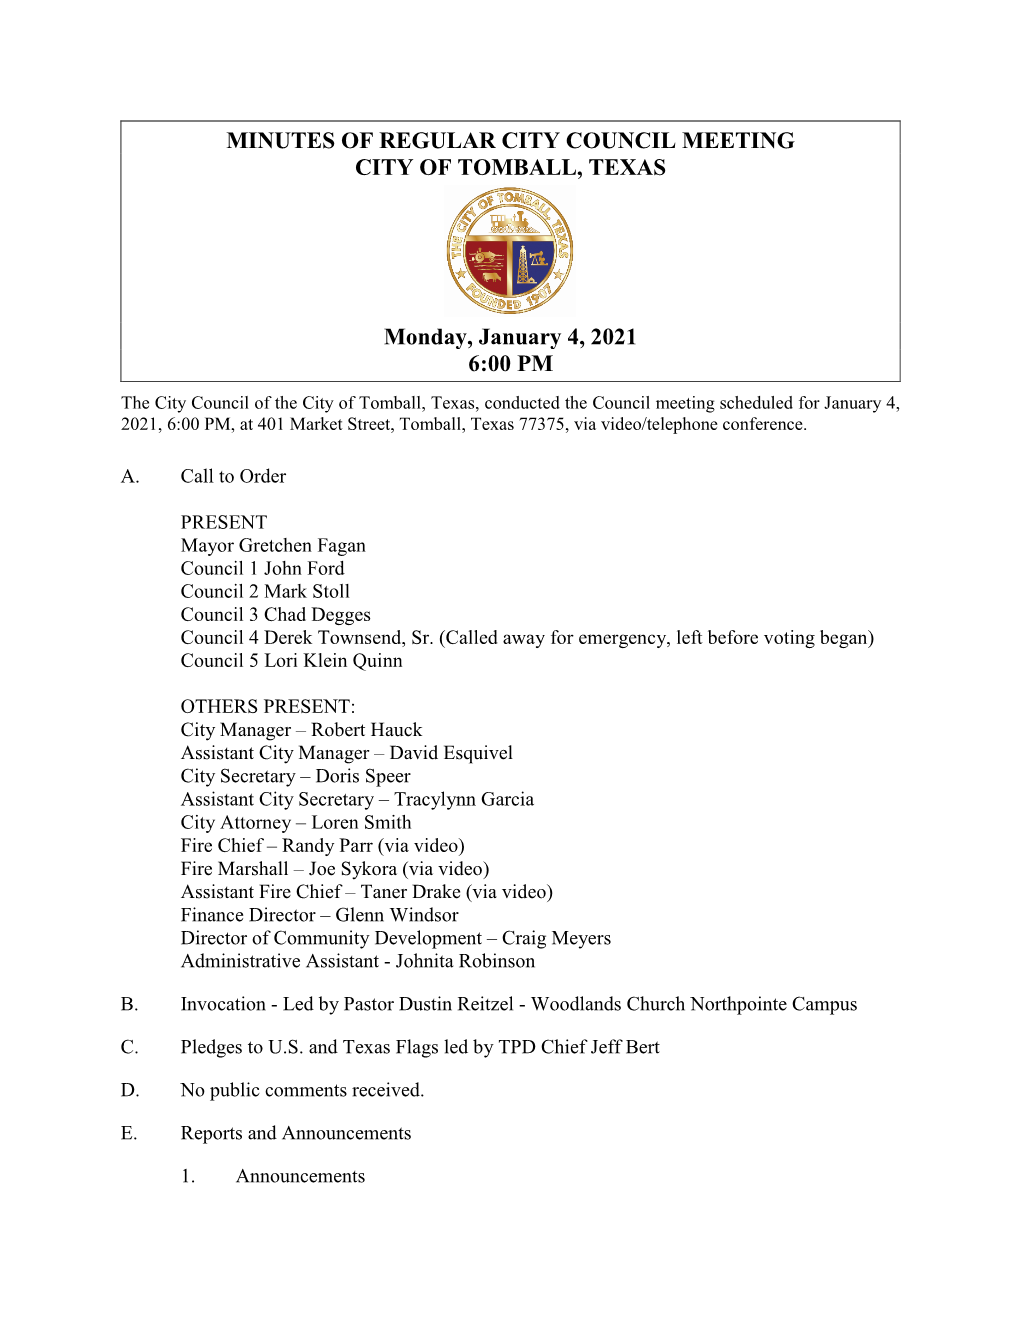 Tomball City Council Regular Meeting Document